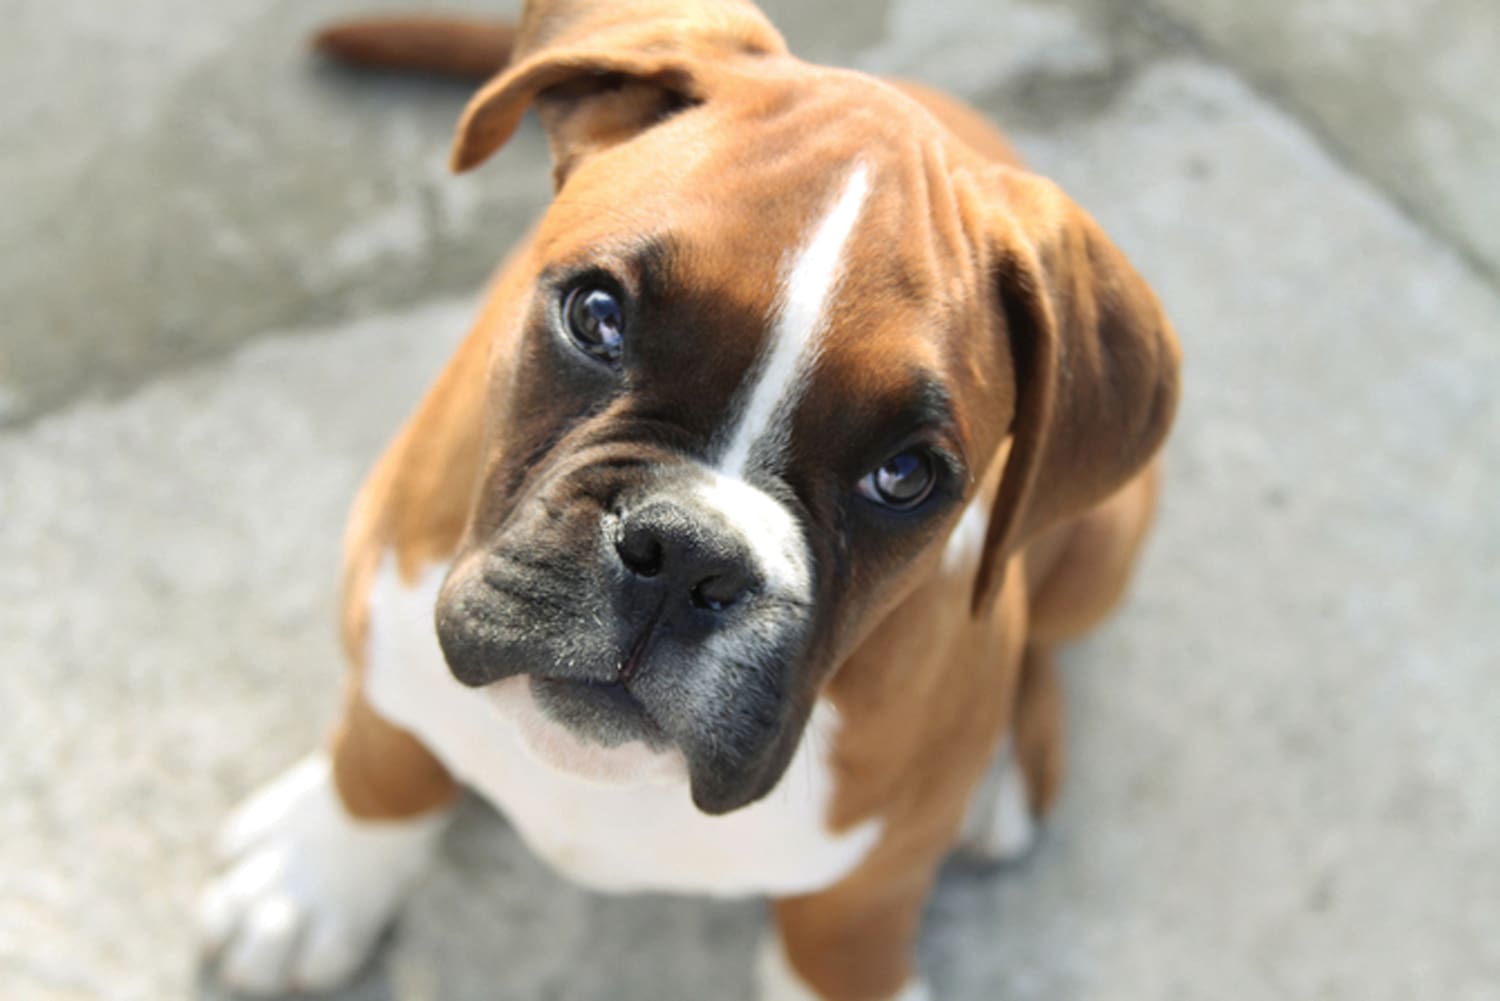 Top 10 Naughtiest Dog Breeds Revealed